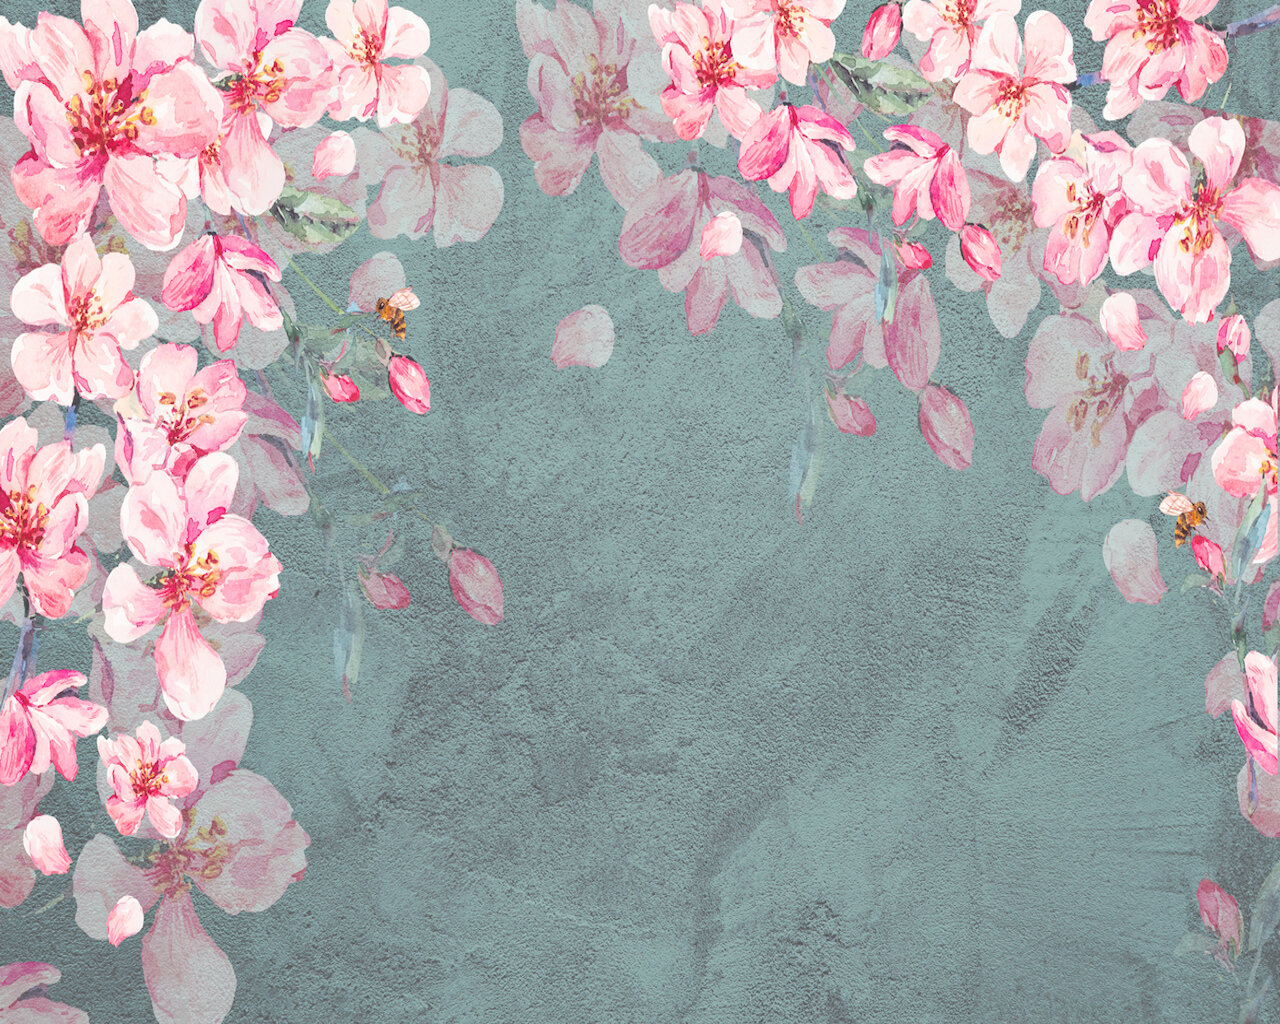 GK Wall Design Cherry Blossom Sakura Wall Painting Pink Flowers Textile Wallpaper